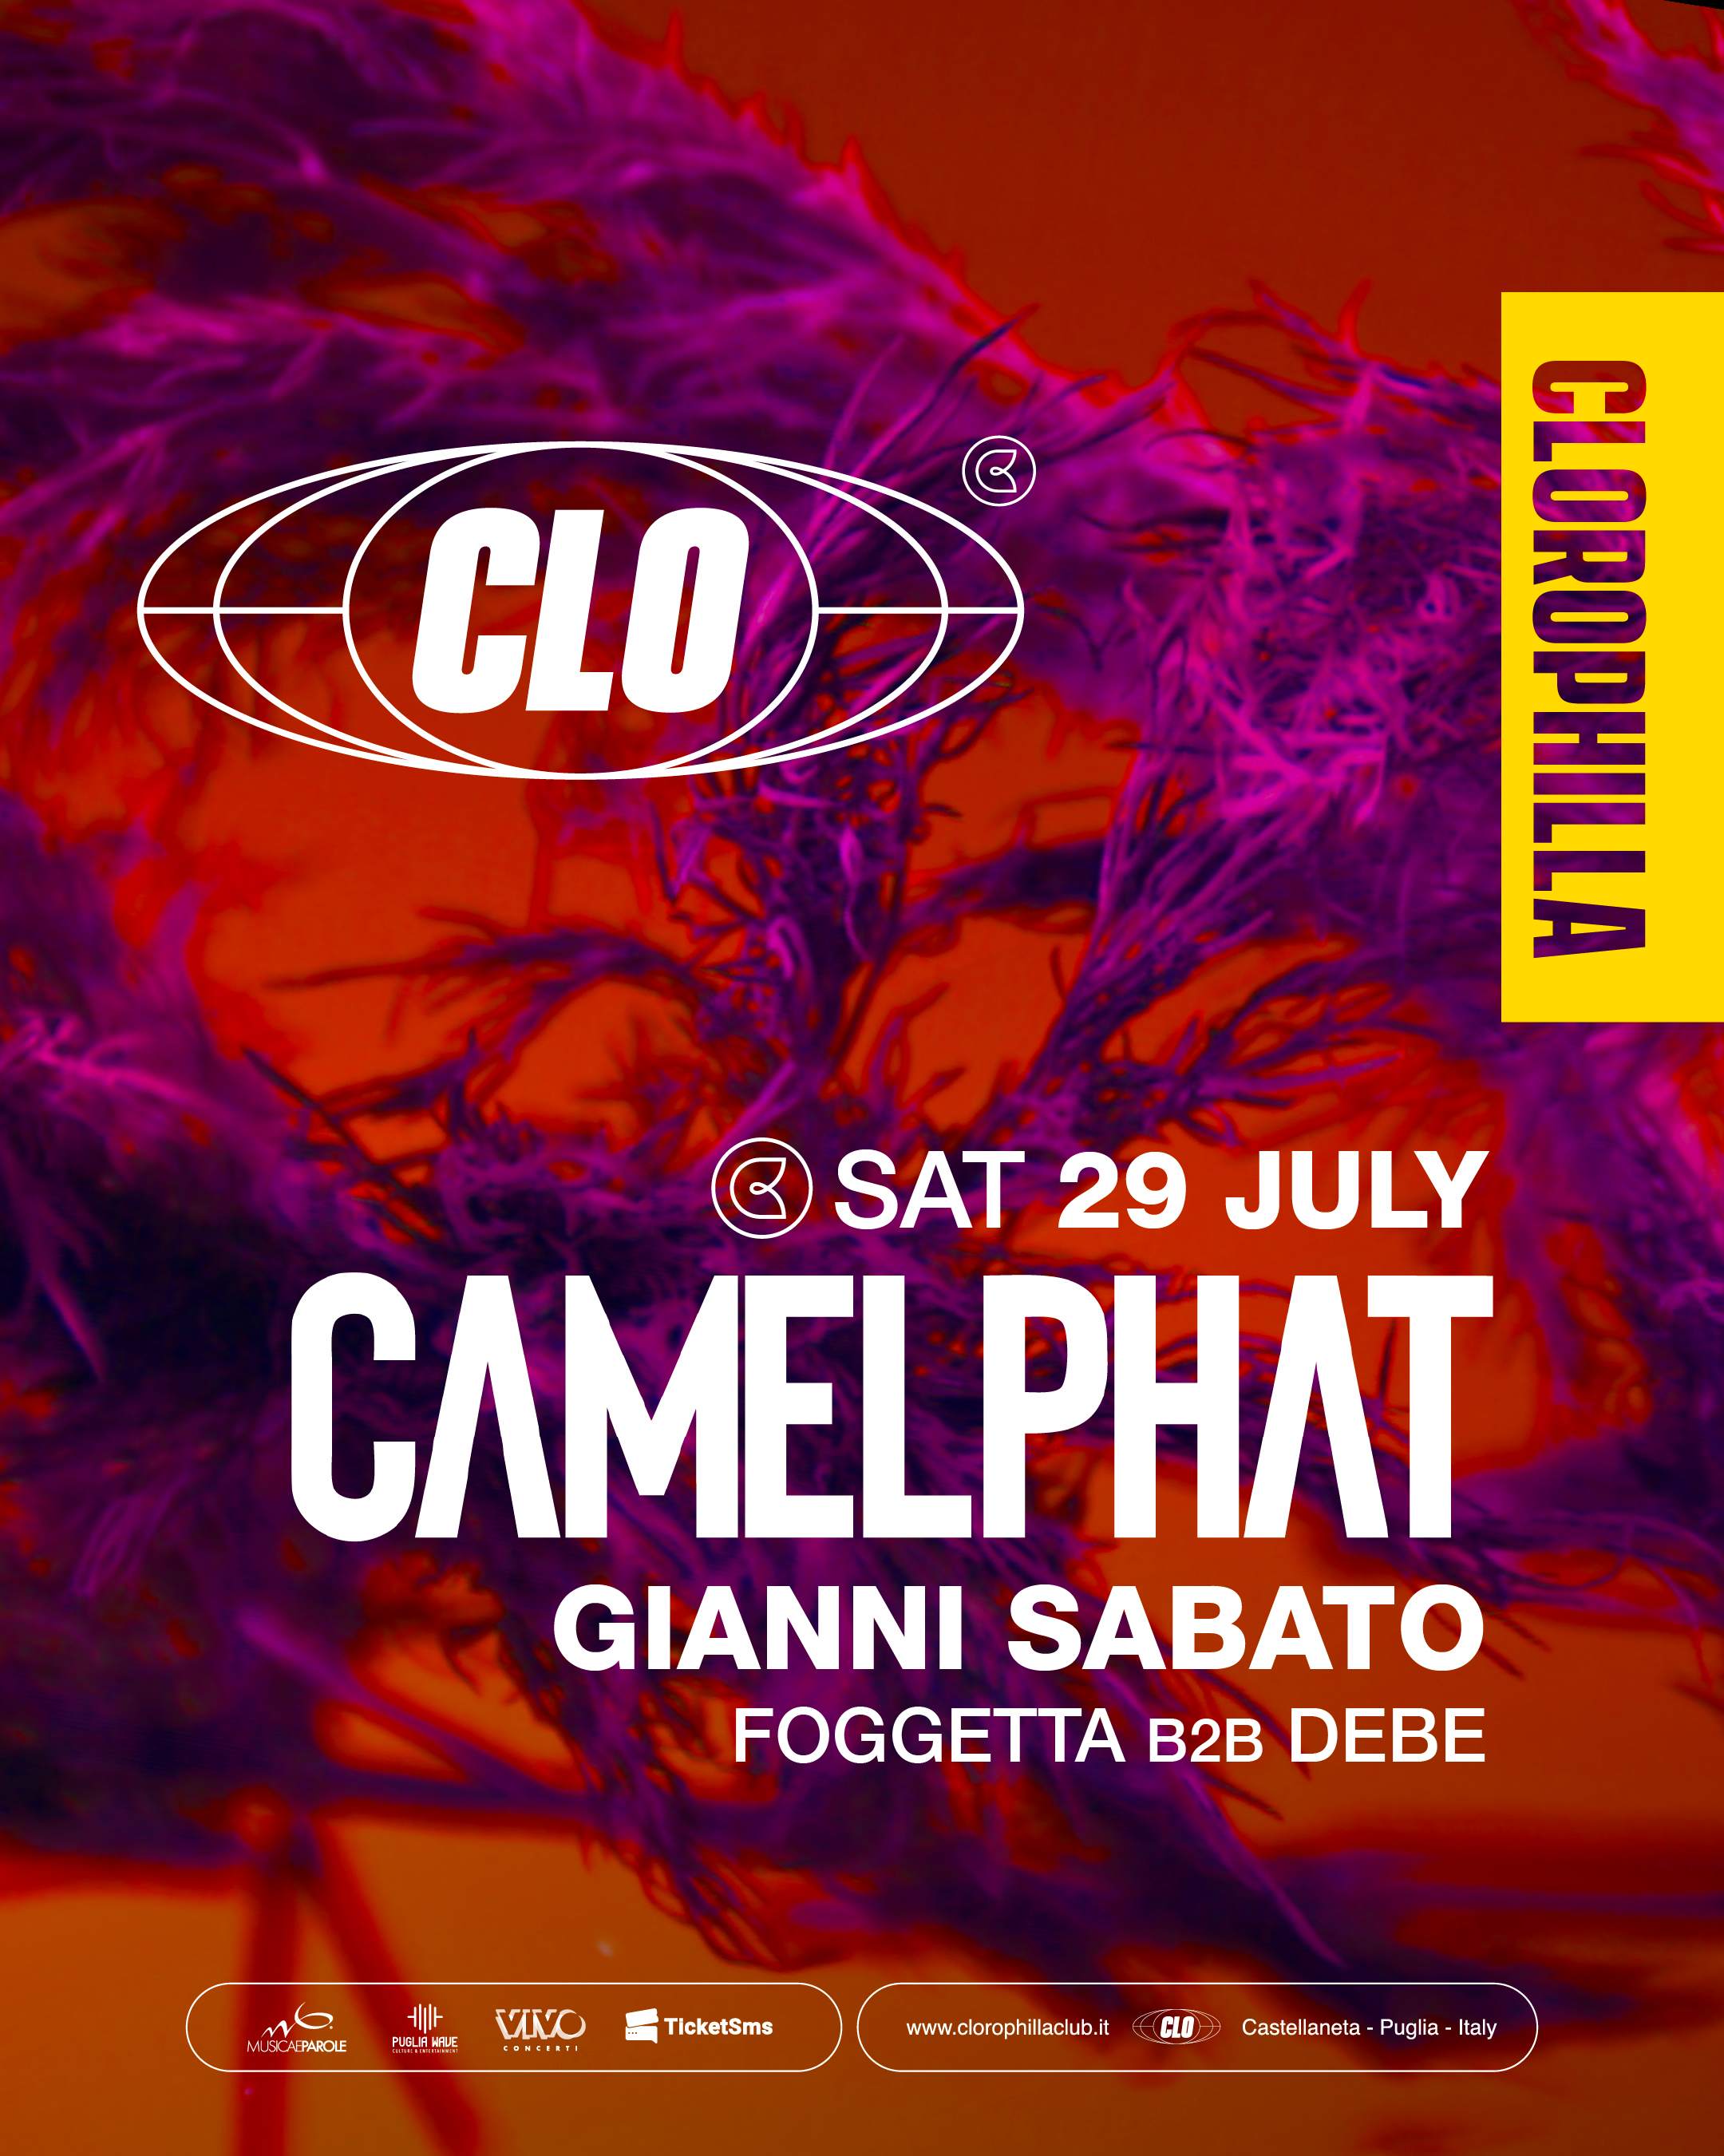 Clorophilla Club with CamelPhat, Gianni Sabato - Página frontal